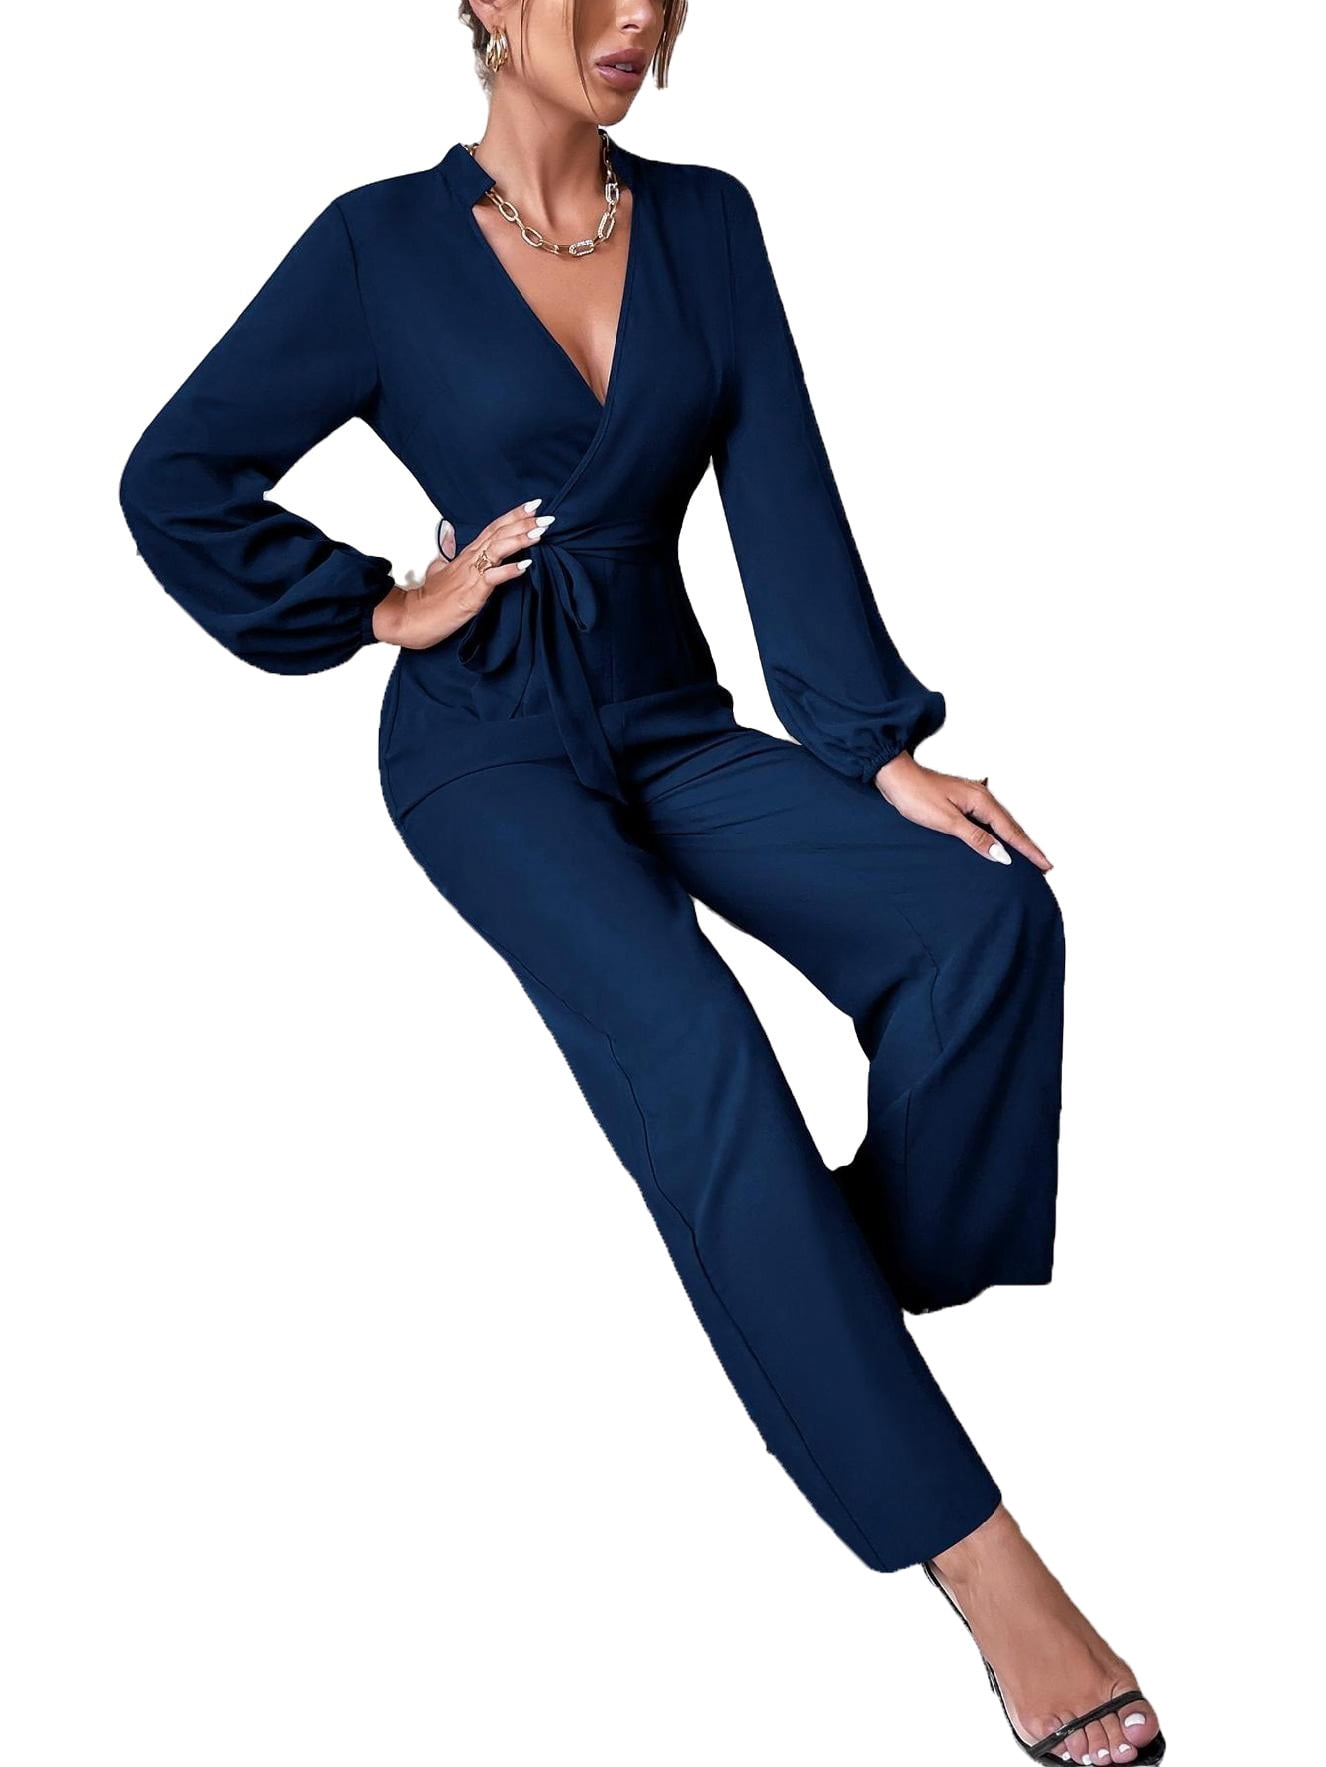 TANGNADE Women Summer V Neck Lace Up Short Sleeve Rompers Jumpsuit Playsuit  Navy Blue + S - Walmart.com